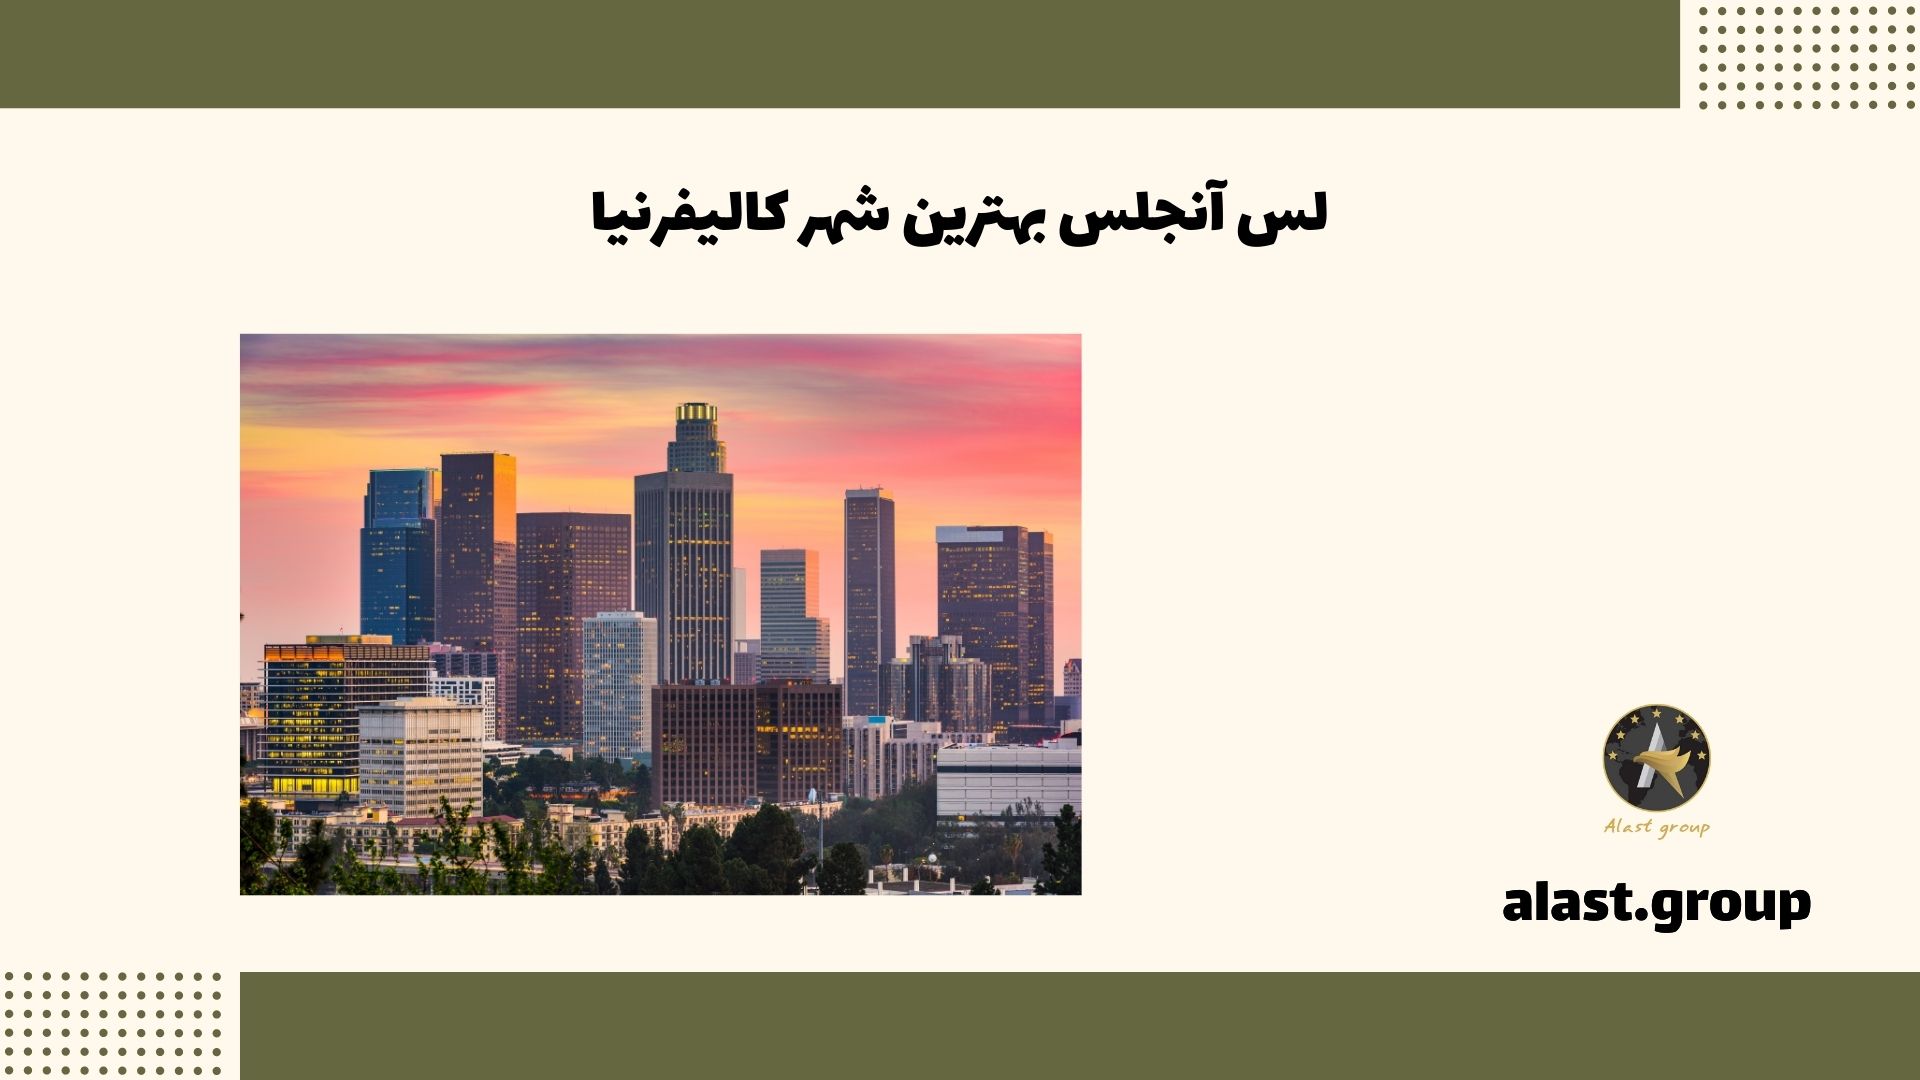 لس آنجلس بهترین شهر کالیفرنیا